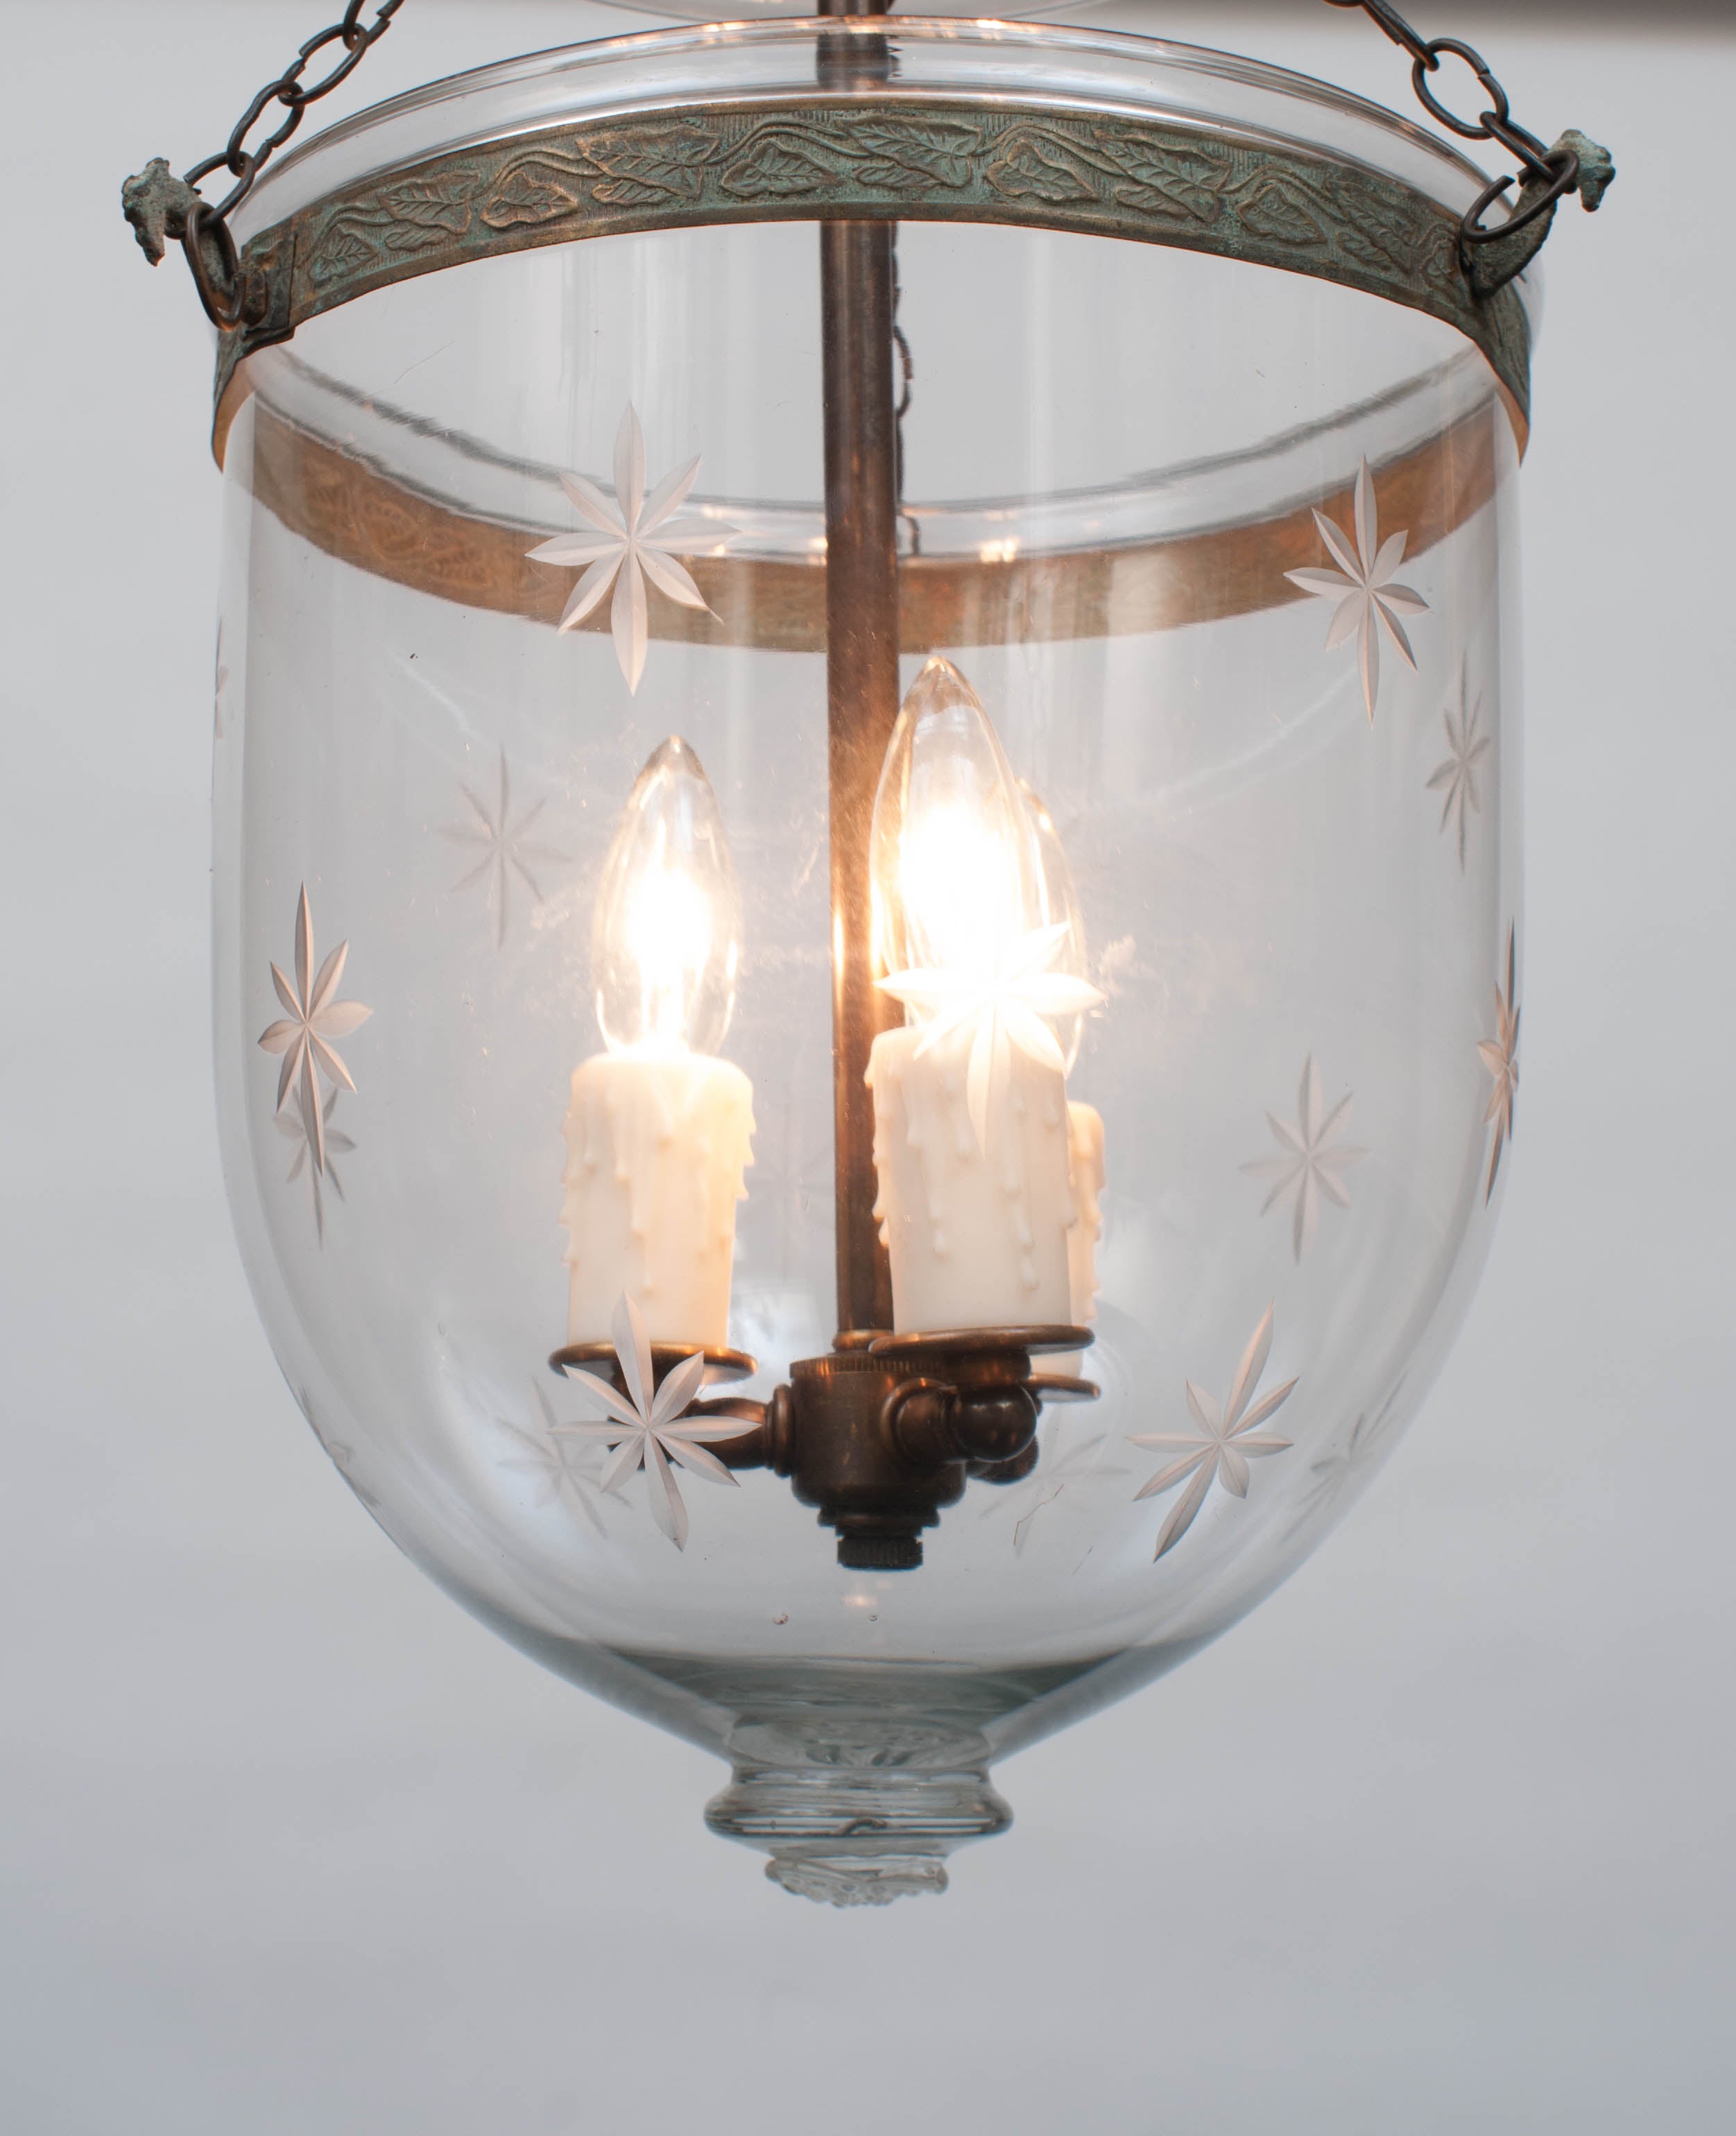 English Star Motif Bell Jar Lantern, England circa 1850